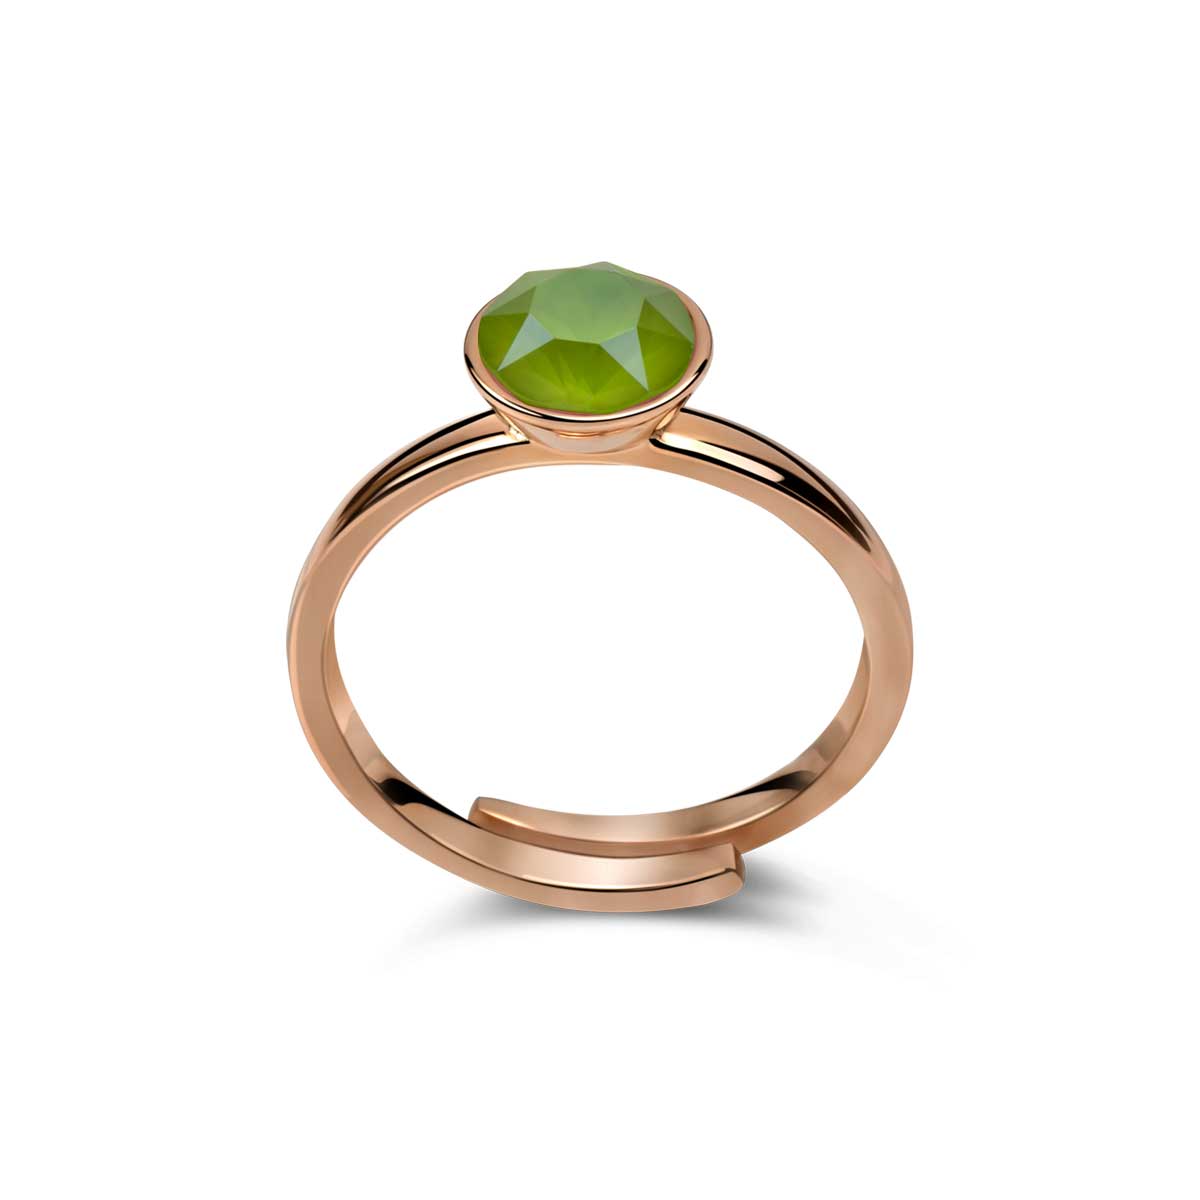 Ring 925 Silber grün peridot verstellbar#oberflache_rosevergoldet